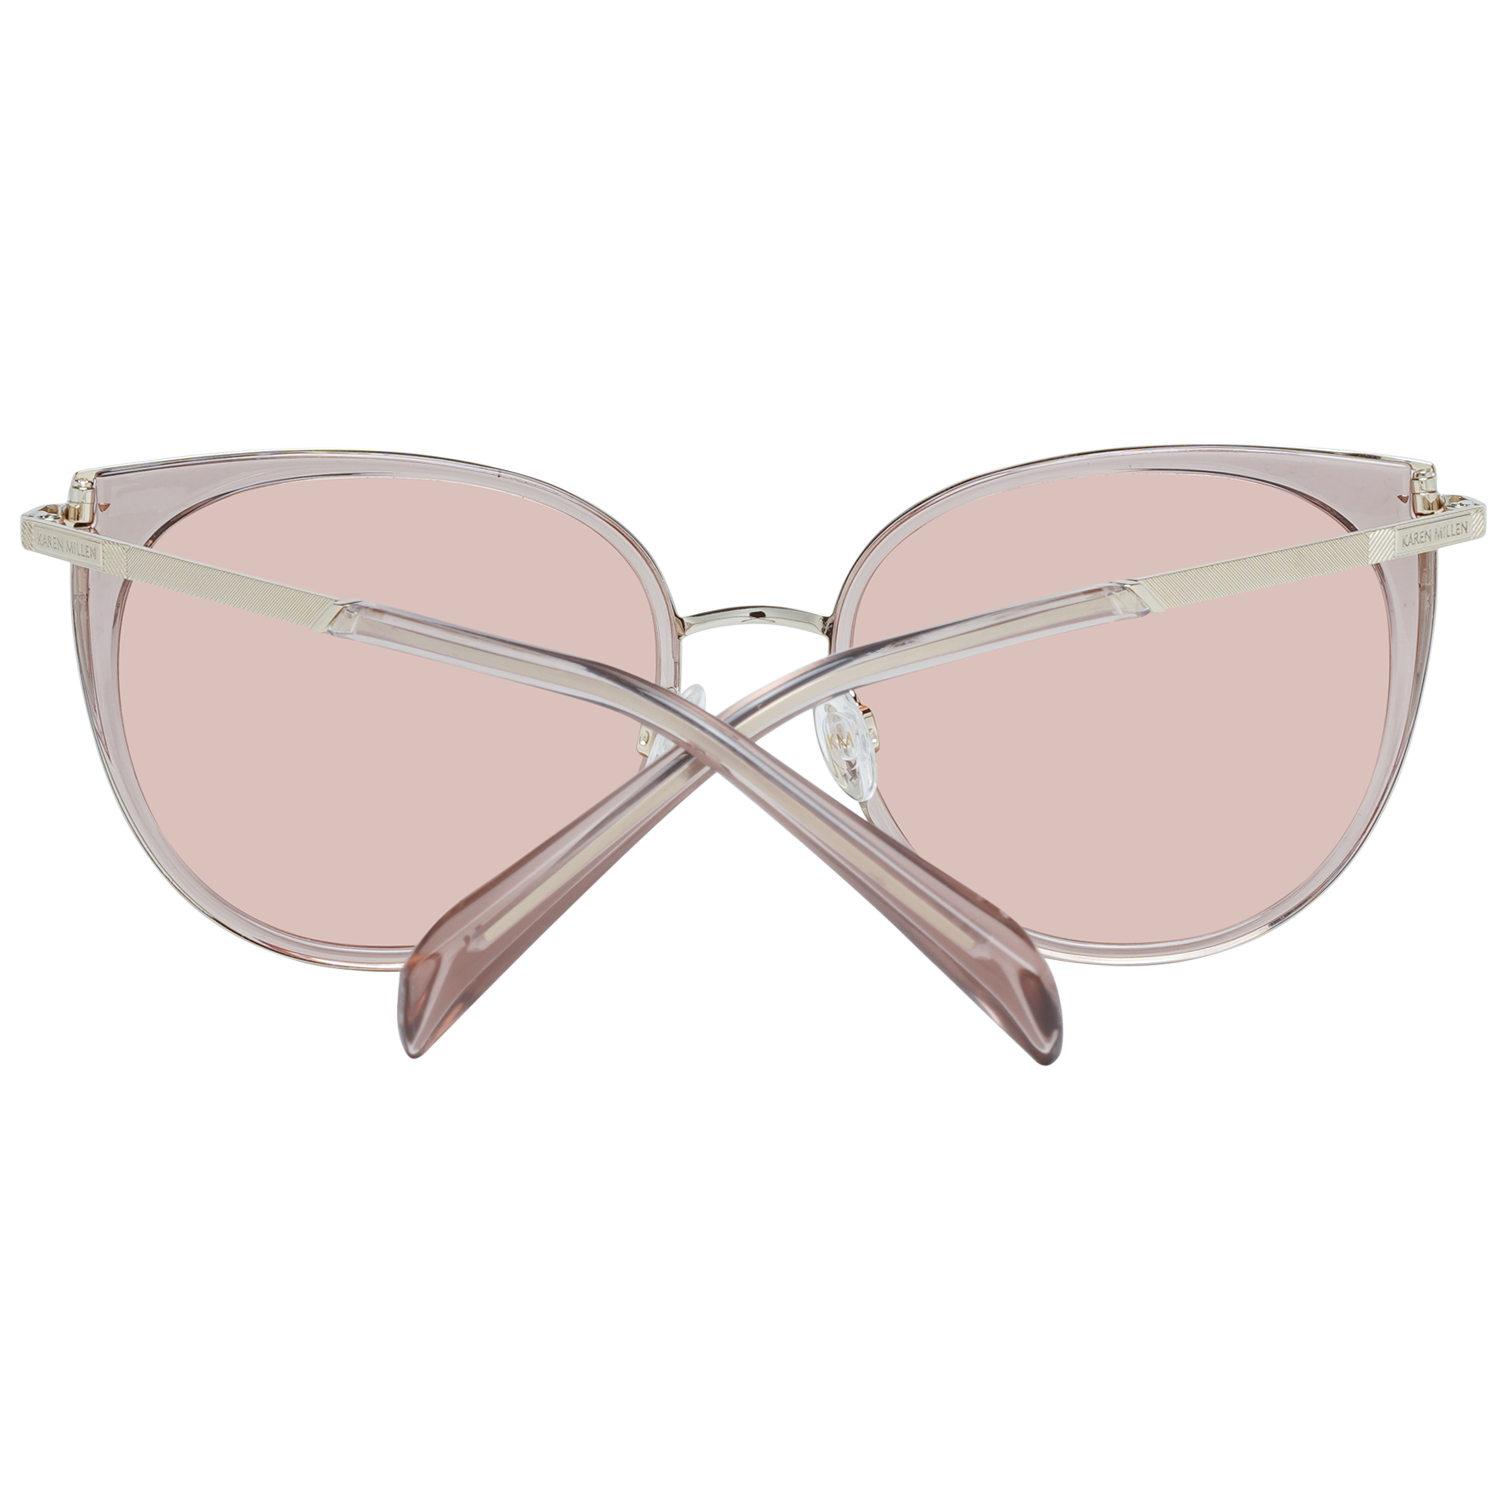 Karen Millen Sunglasses Karen Millen Sunglasses KM5042 297 55 Eyeglasses Eyewear UK USA Australia 